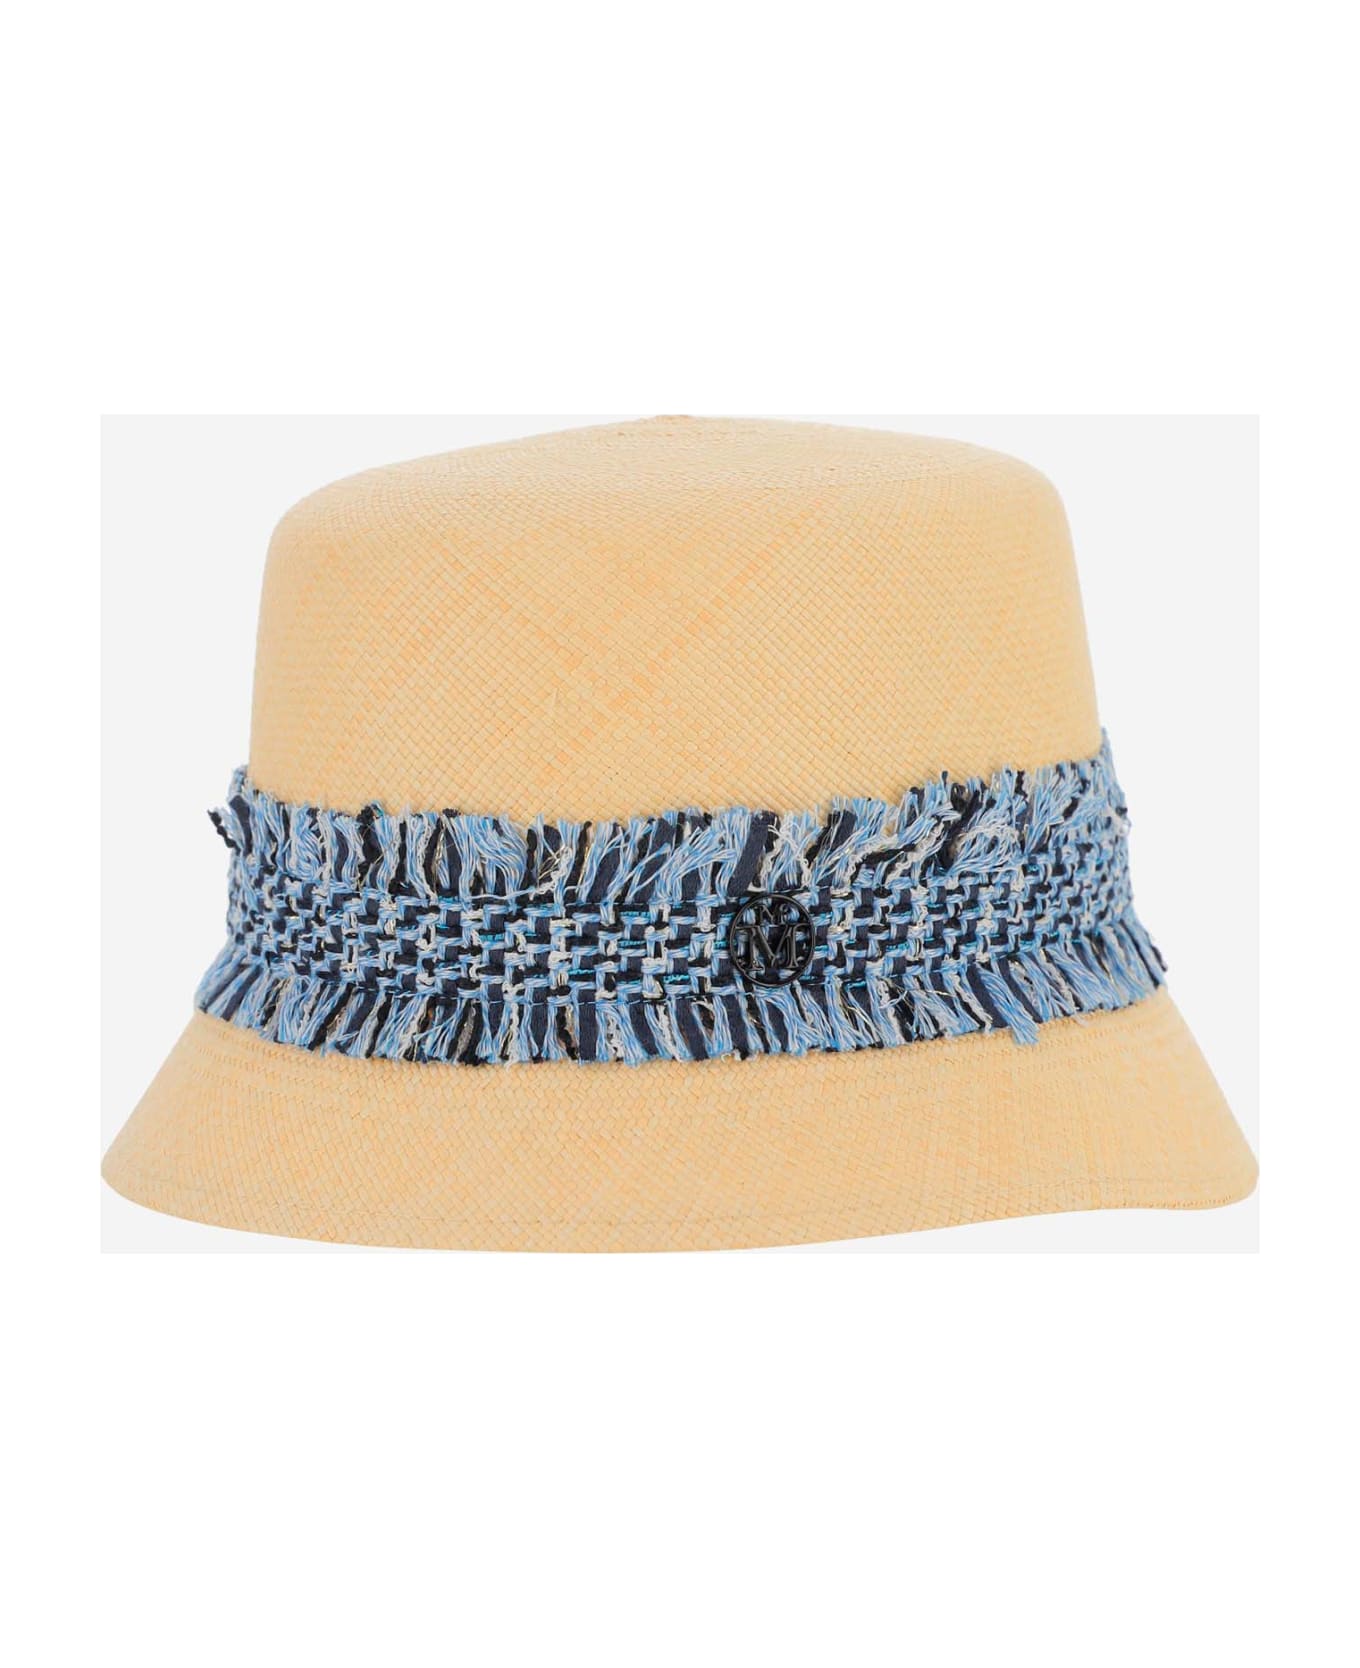 Maison Michel Mini New Kendall Hat - Beige